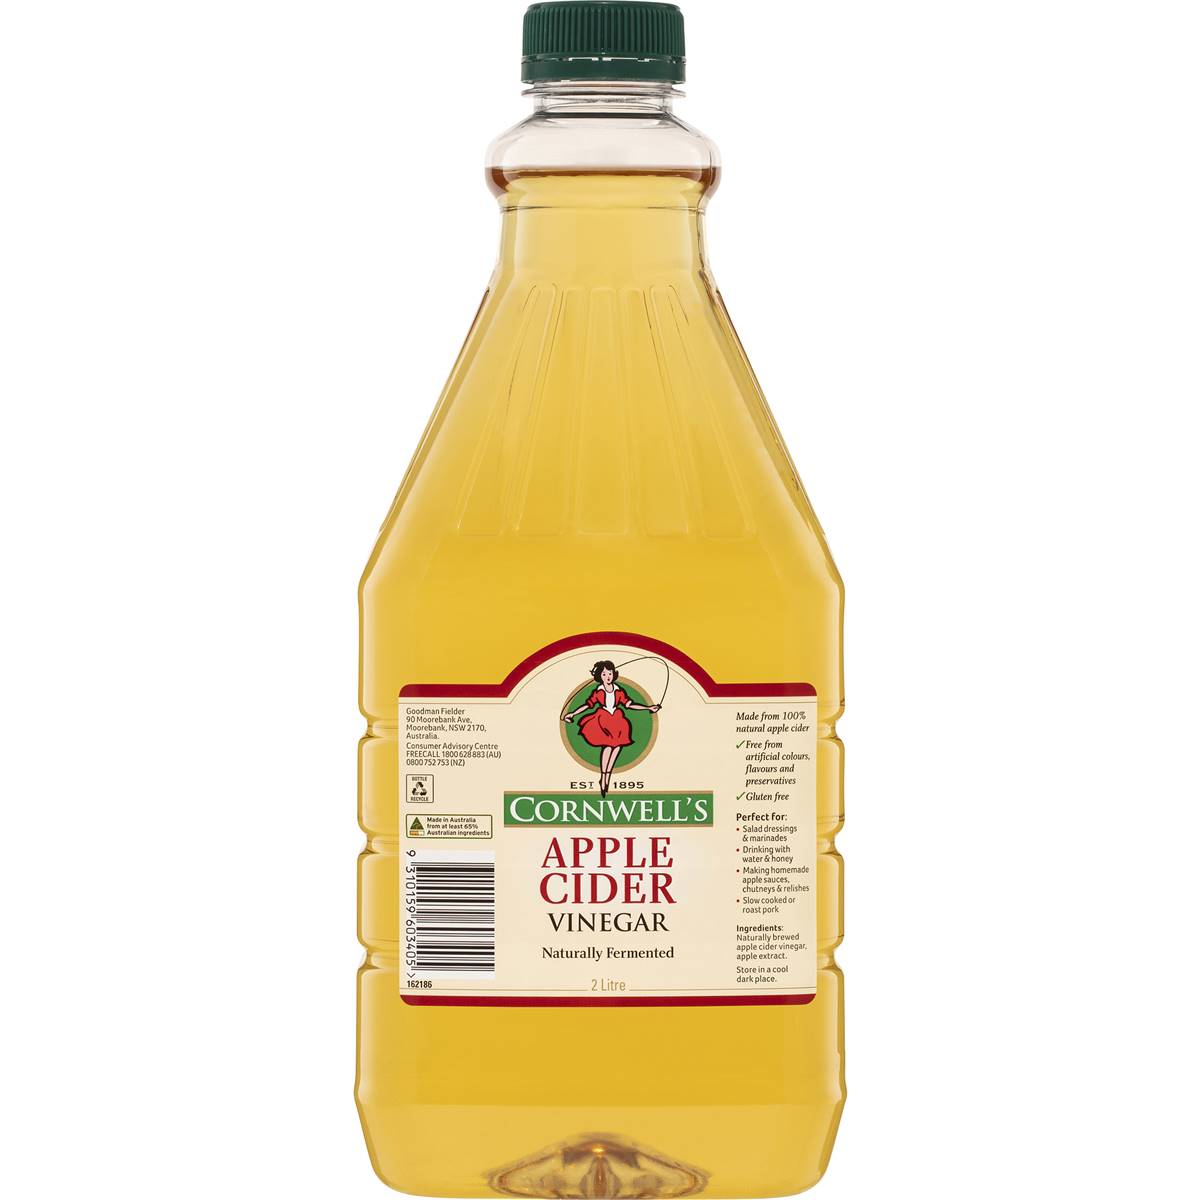 Calories in Cornwell's Apple Cider Vinegar Cider